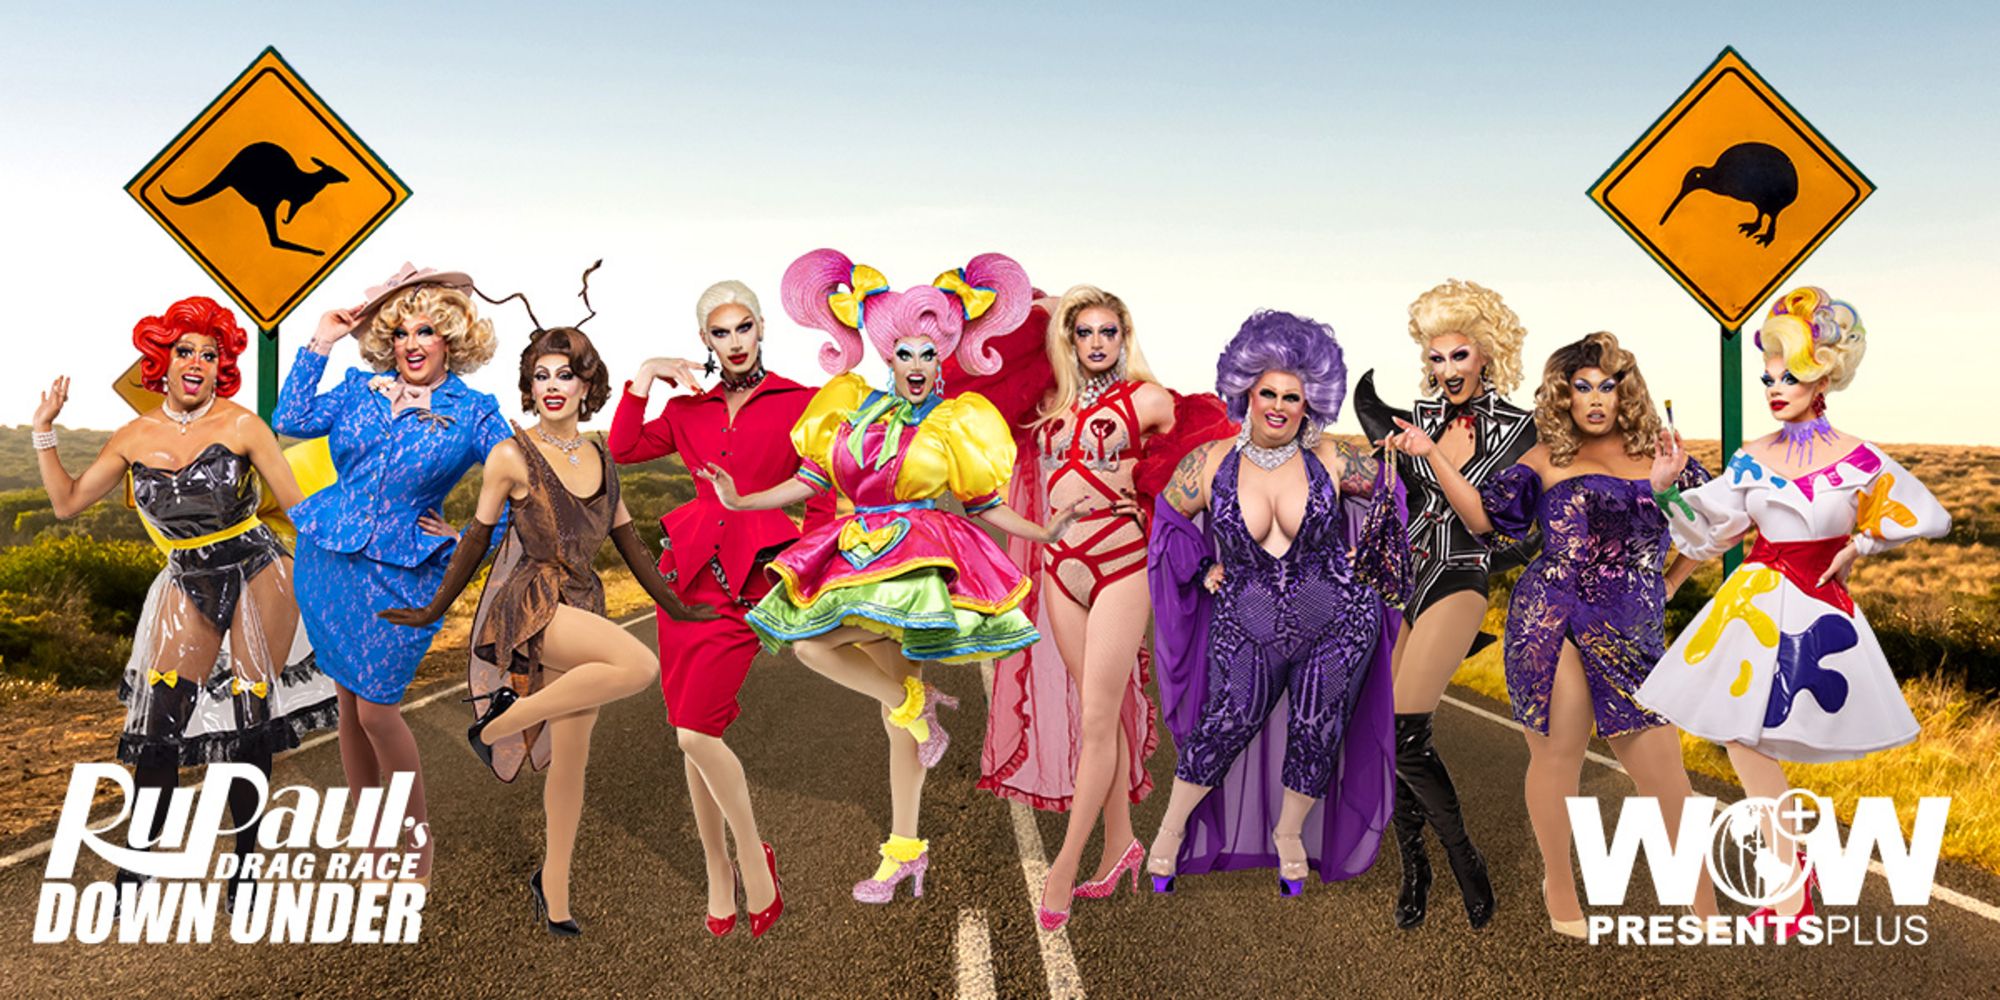 The queens of RuPauls Drag Race Down Under season 1